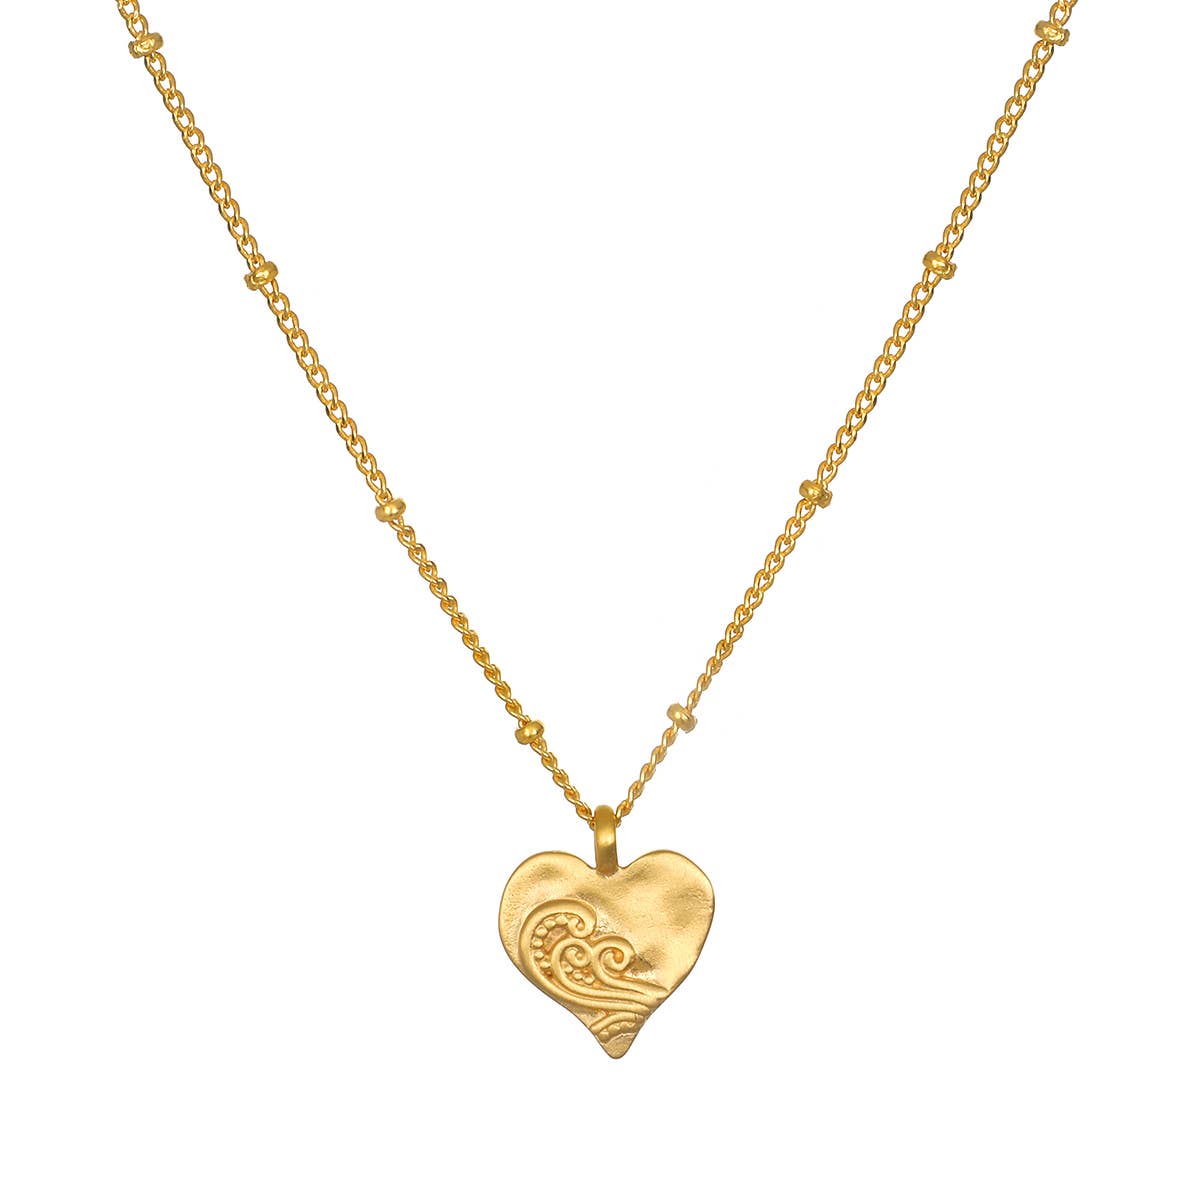 Spirit of Love Gold Necklace - Abigail Fox Designs